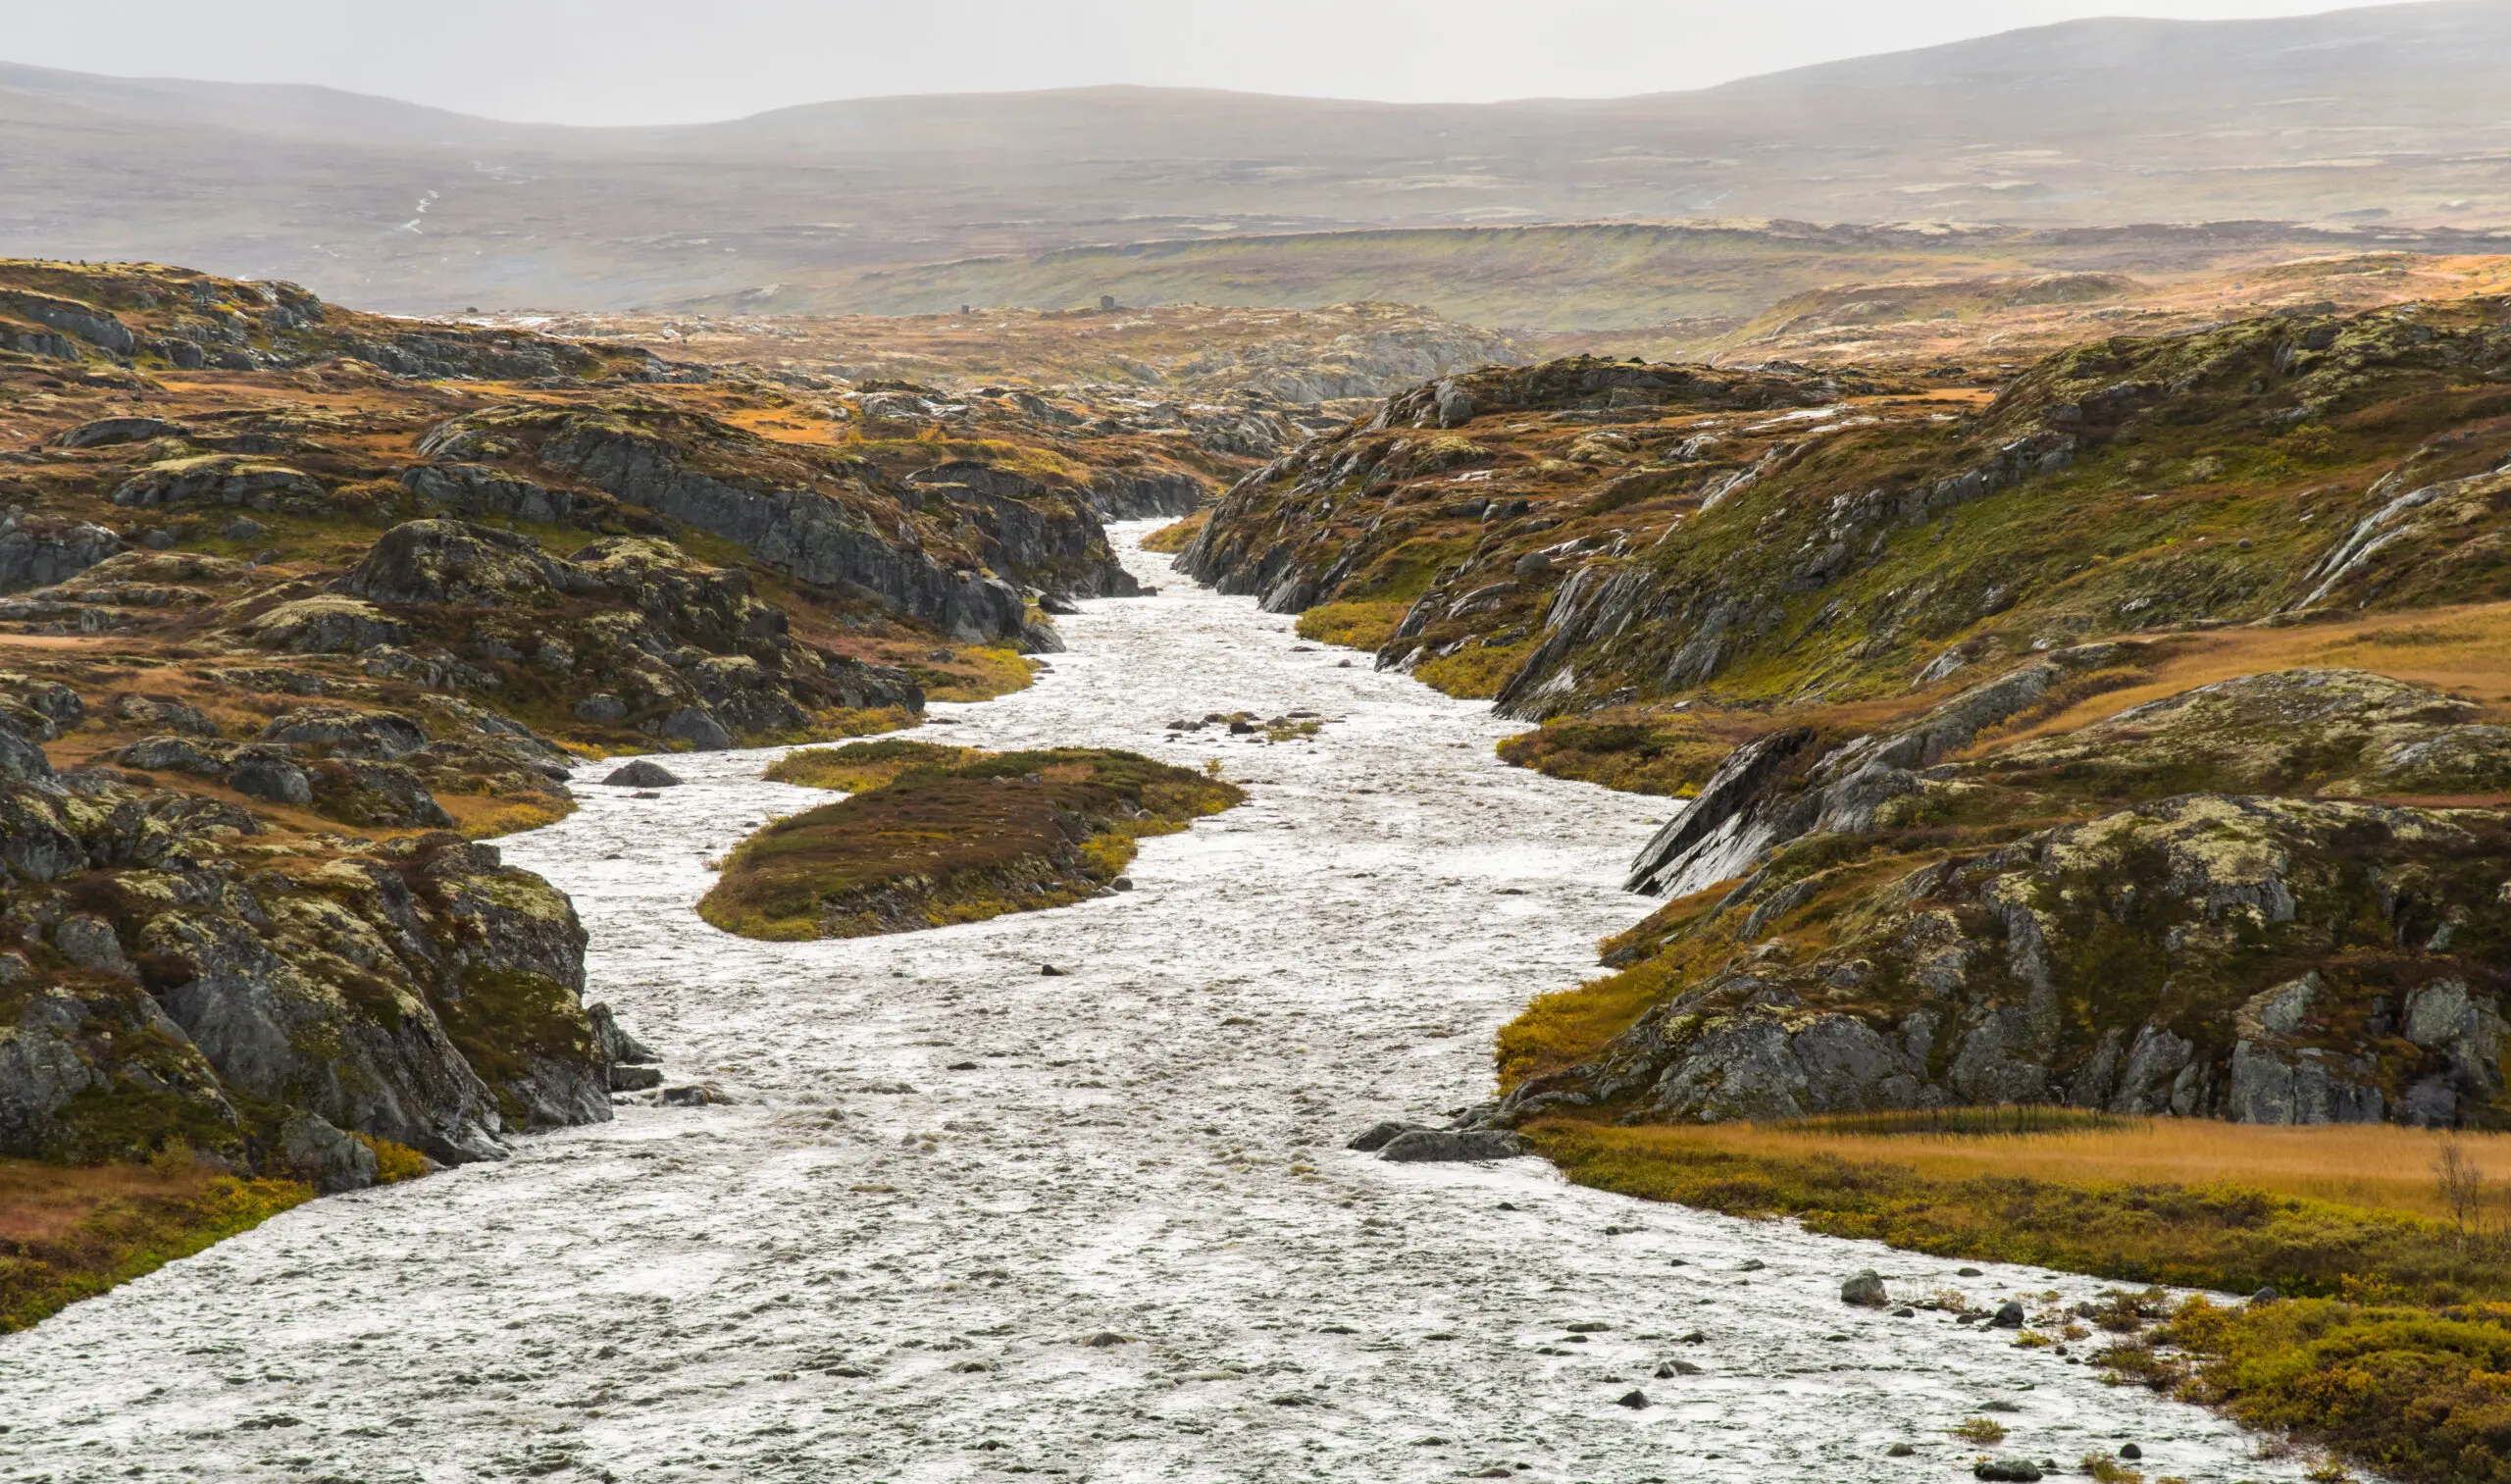 Wandbild (4325) Hochland Norwegen präsentiert: Landschaften,Gewässer